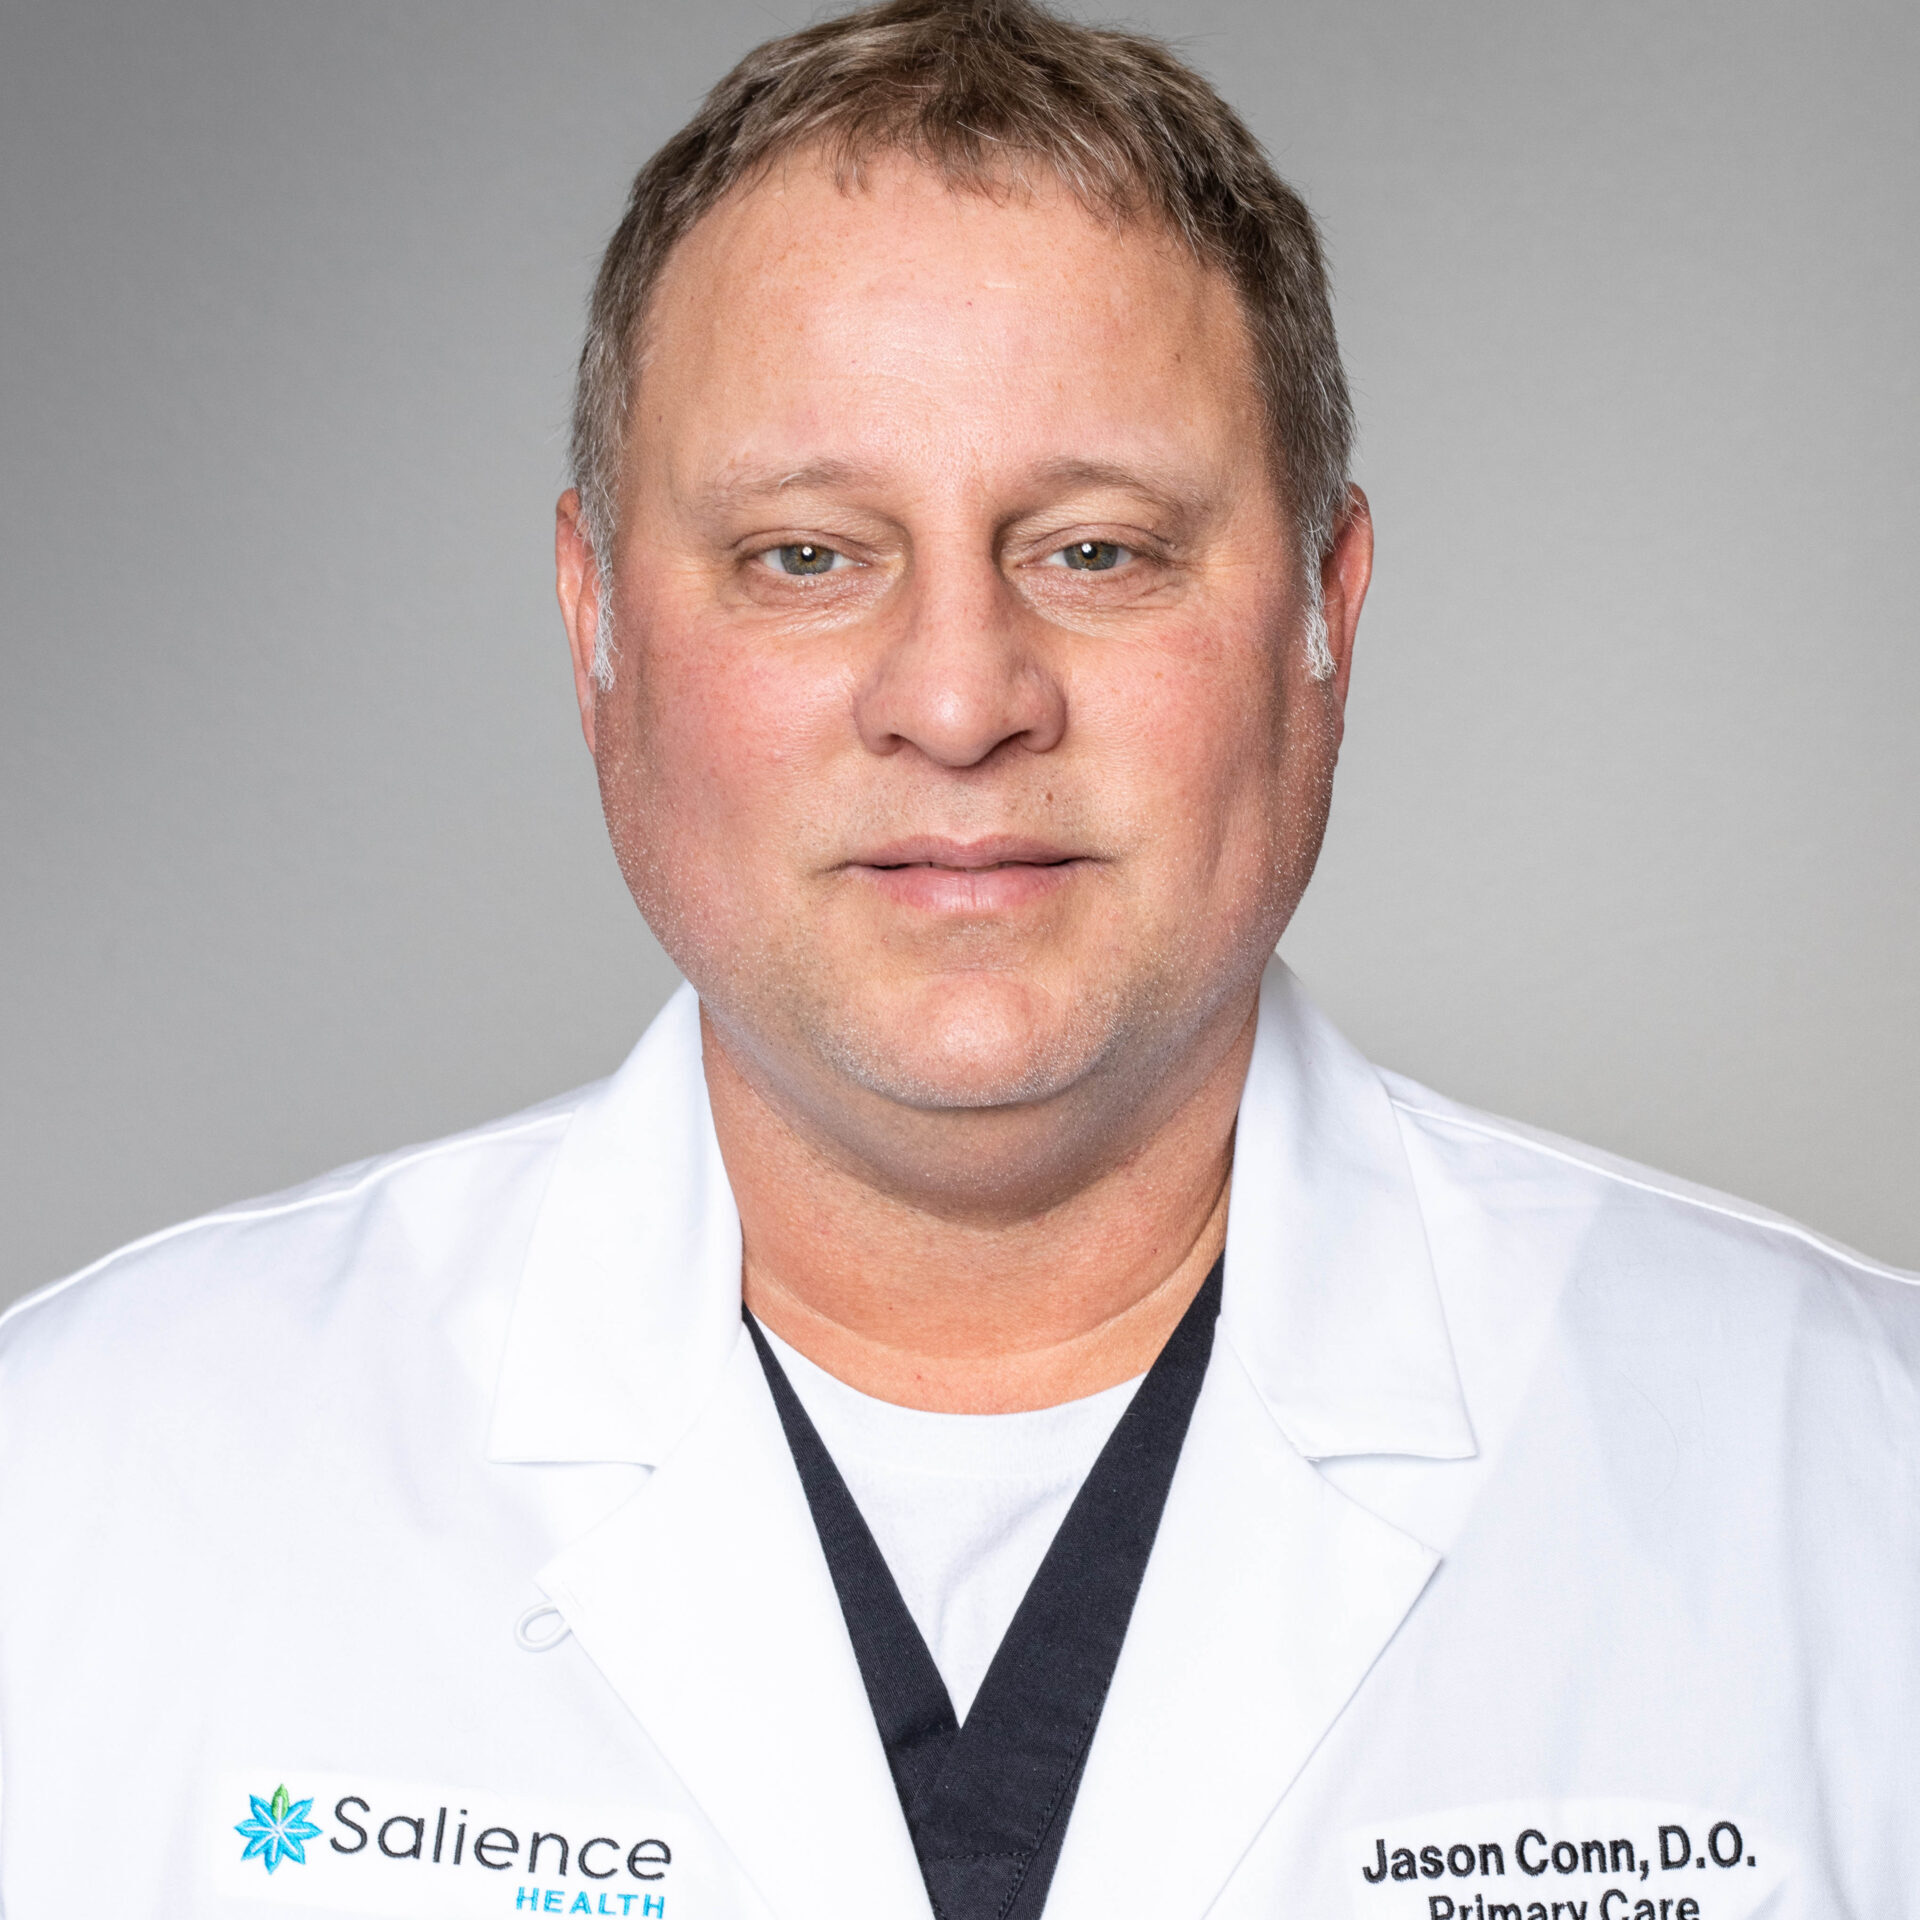 Jason Conn, D.O. Primary Care Physician at Salience Health